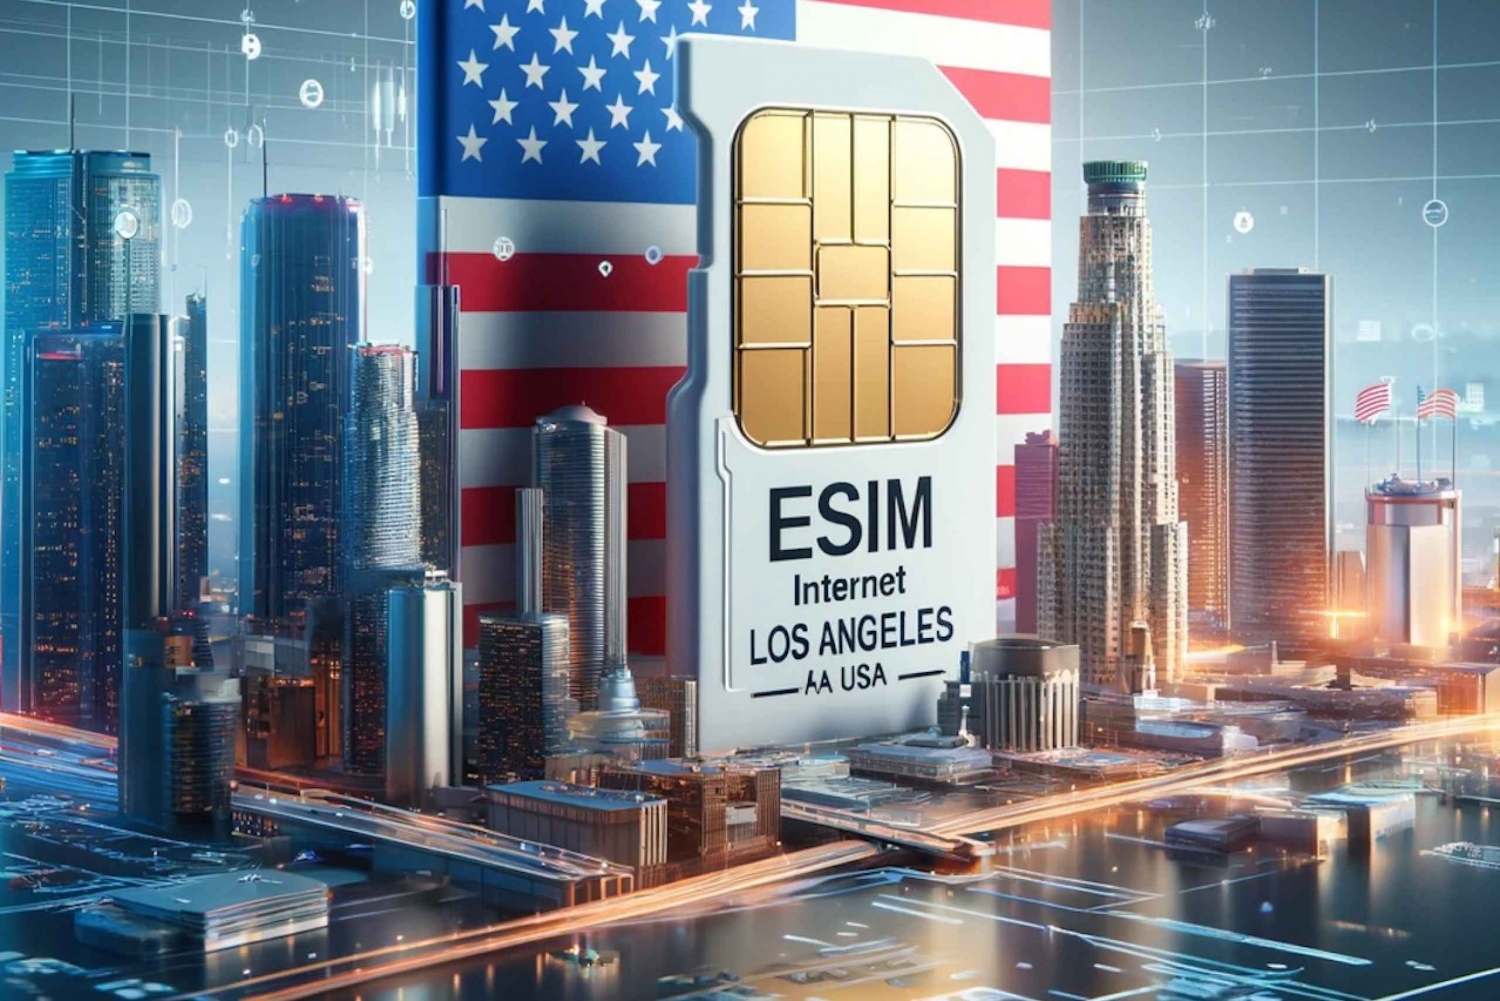 USA : eSIM Internet Data Plan for 5G United States